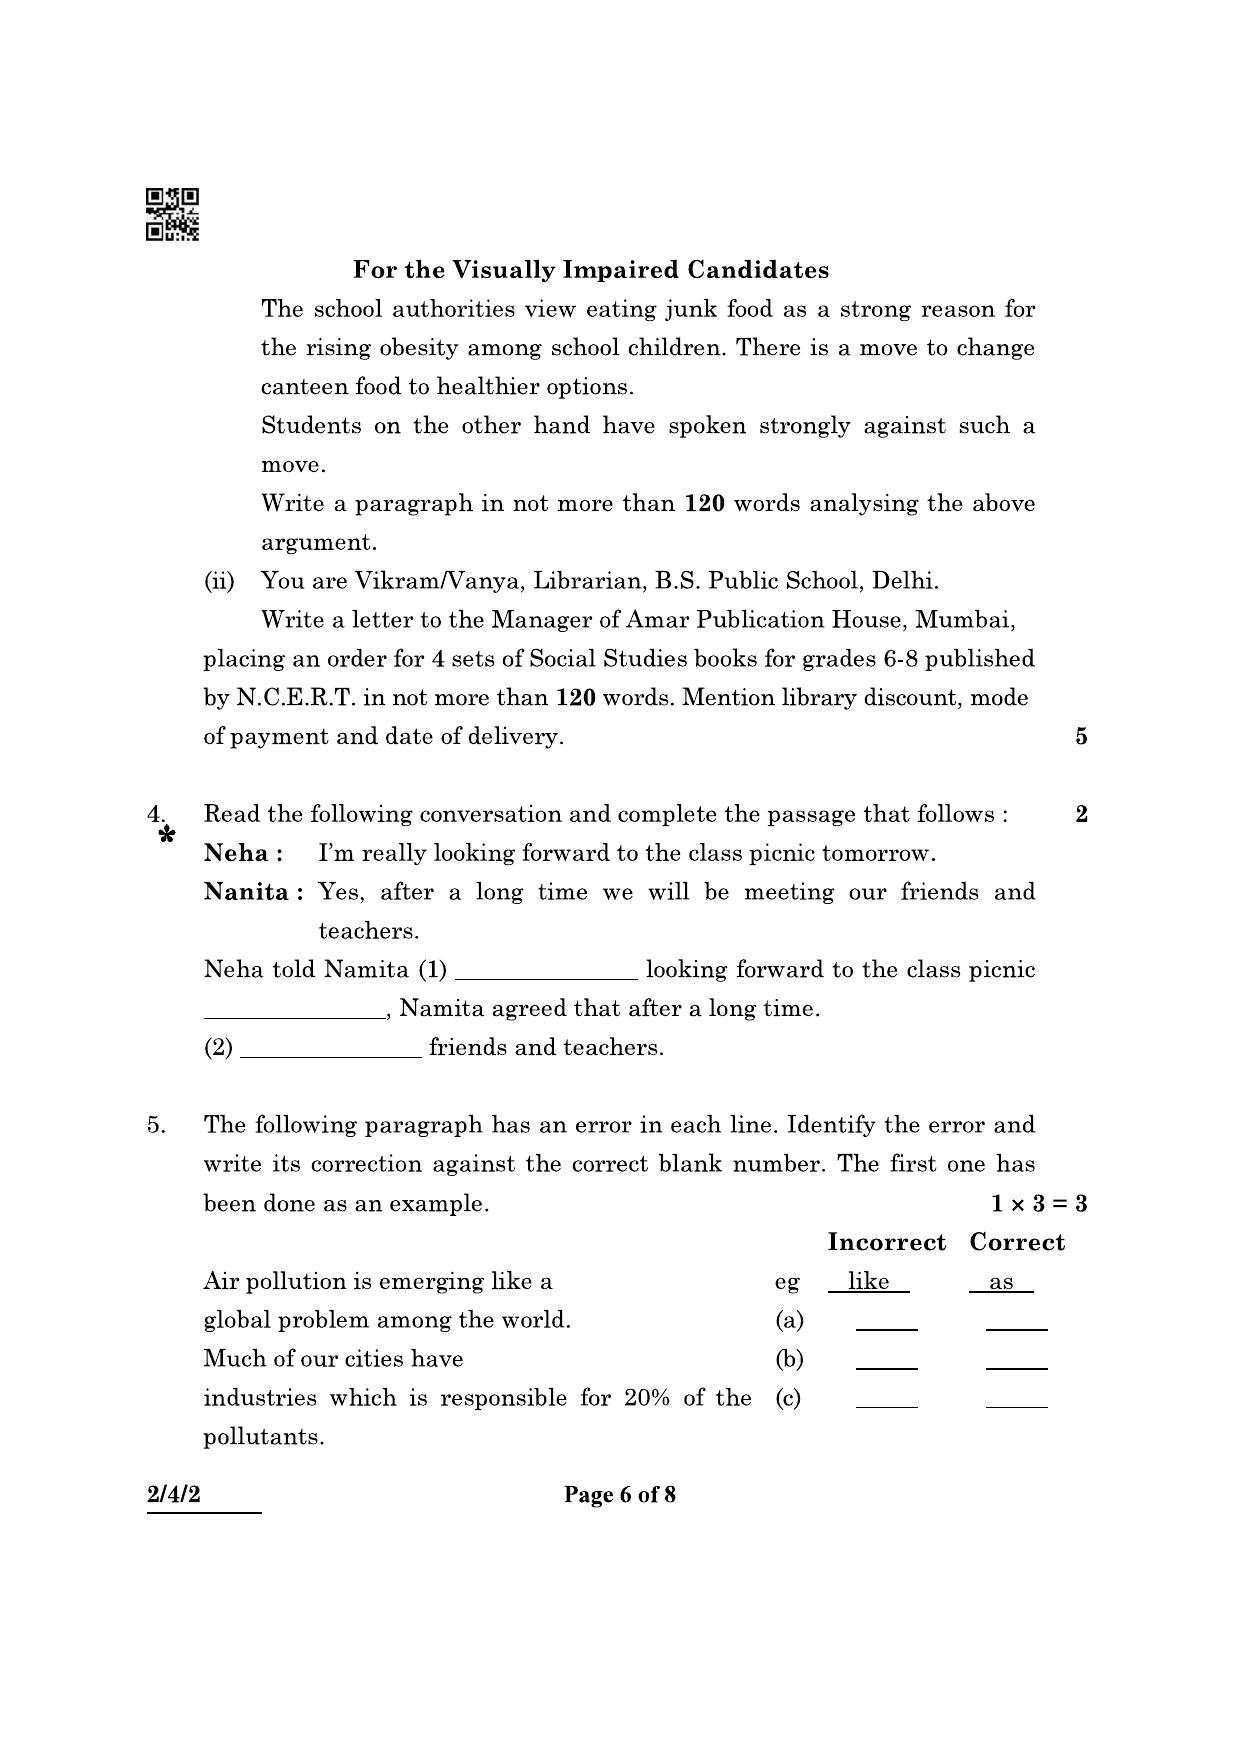 CBSE Class 10 2-4-2 (English L & L) 2022 Question Paper - Page 6